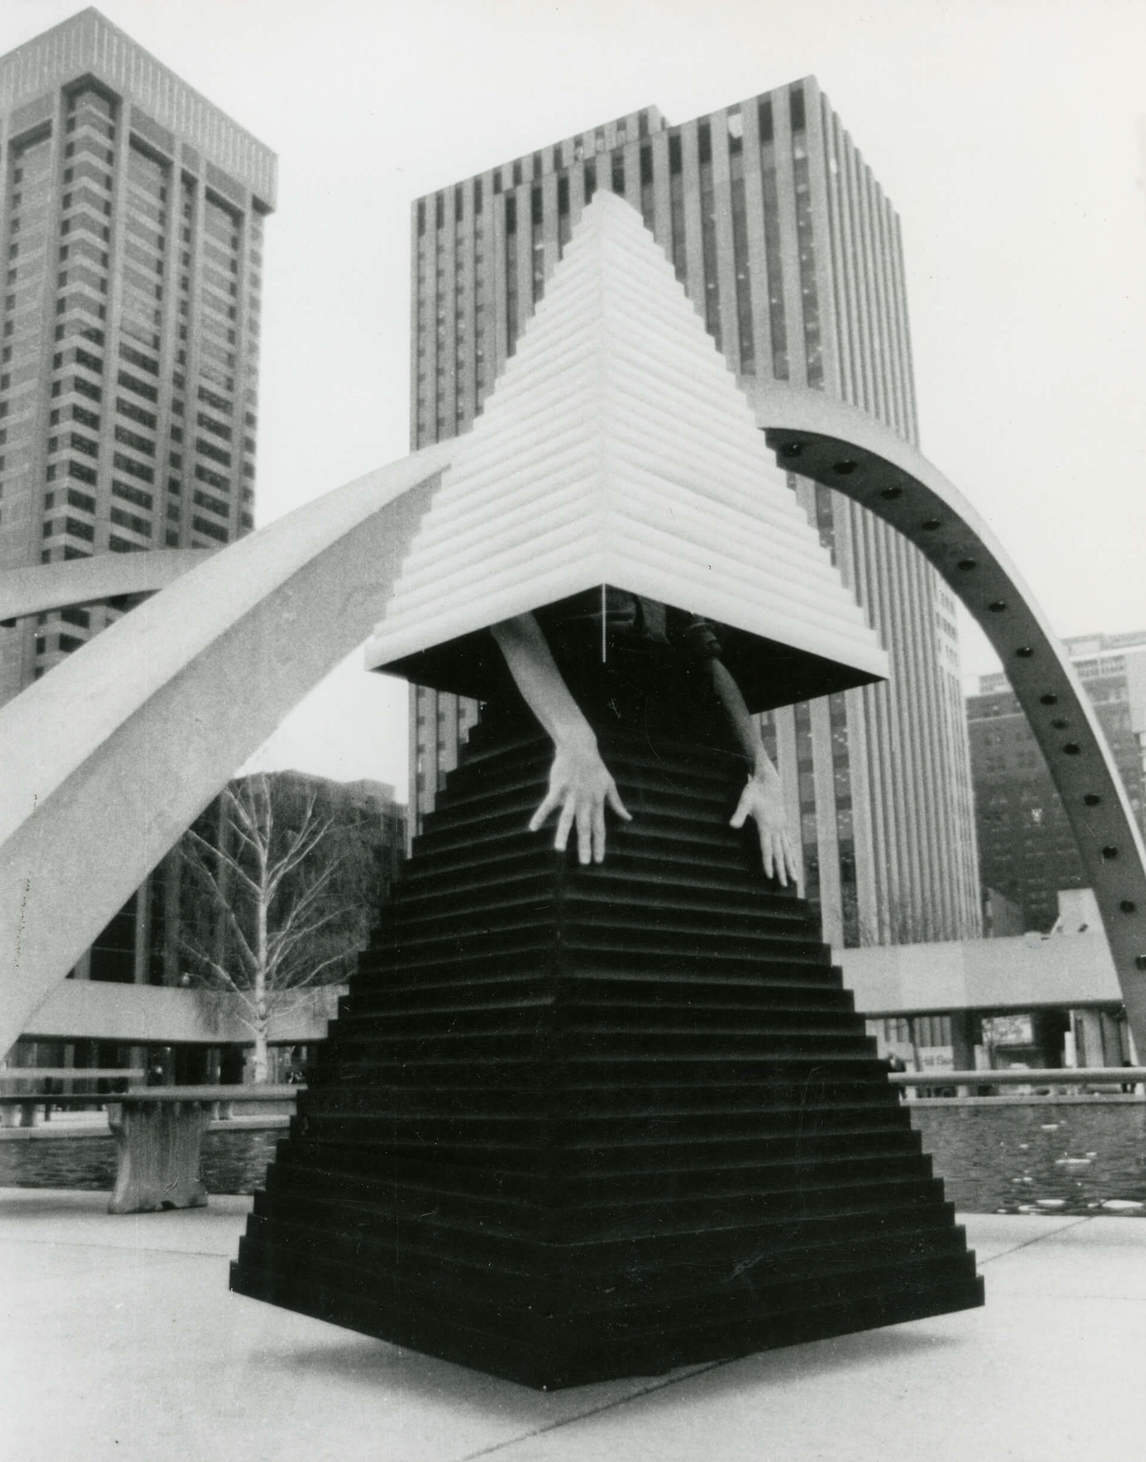 Art Canada Institute, Felix Partz models V.B. Gown #3 (Massing Studies for the Pavillion #3) at City Hall, Toronto, 1975